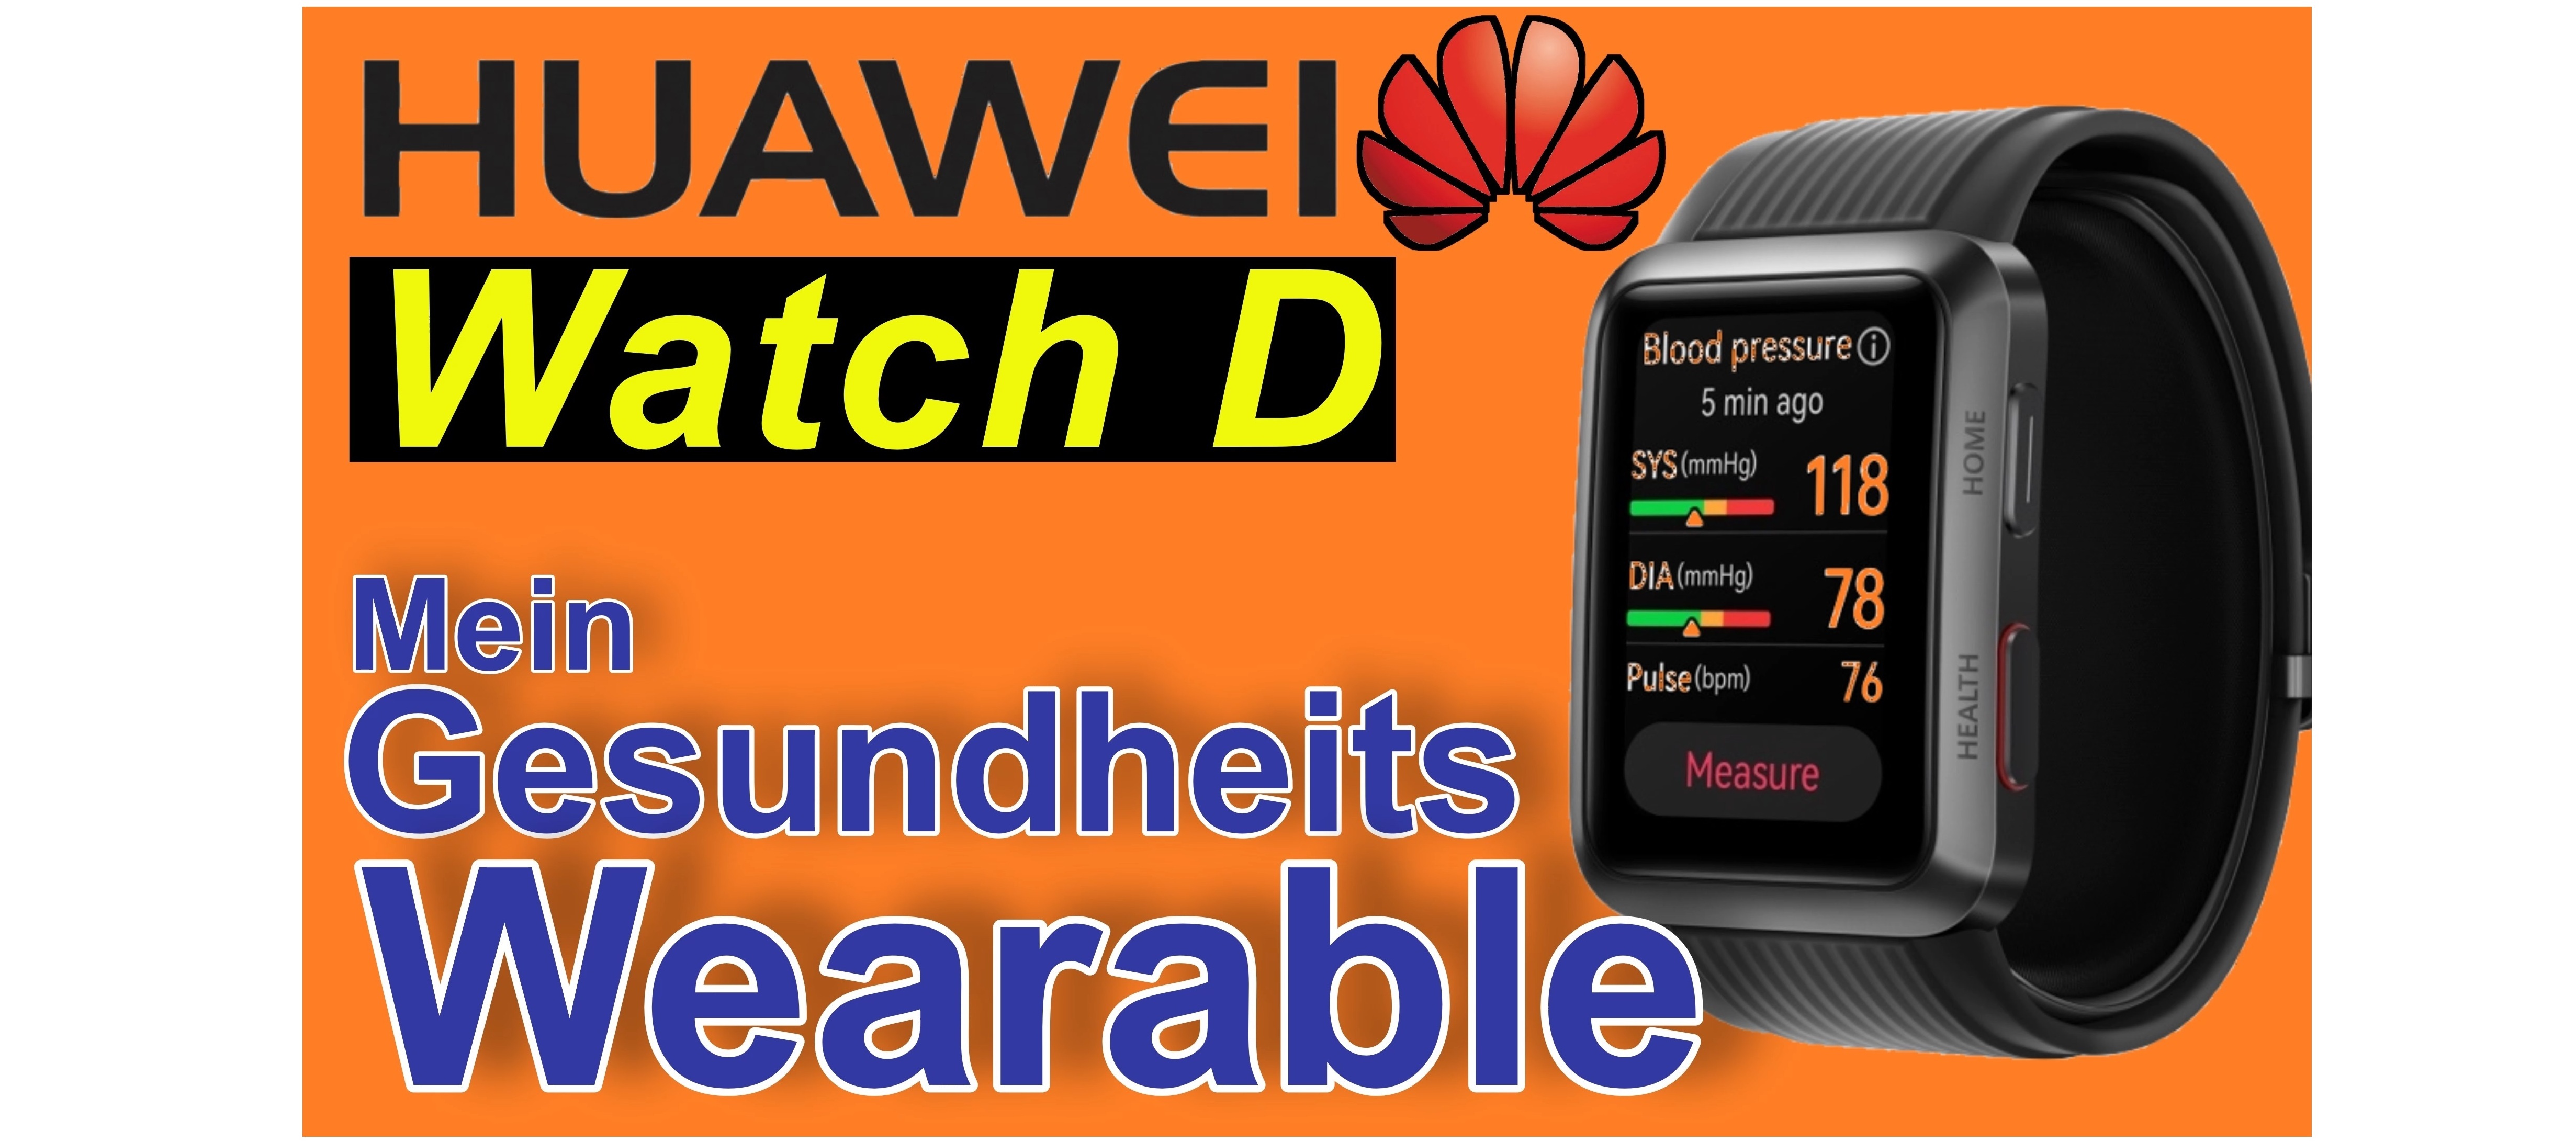 Huawei Watch D - messen, tracken, analysieren